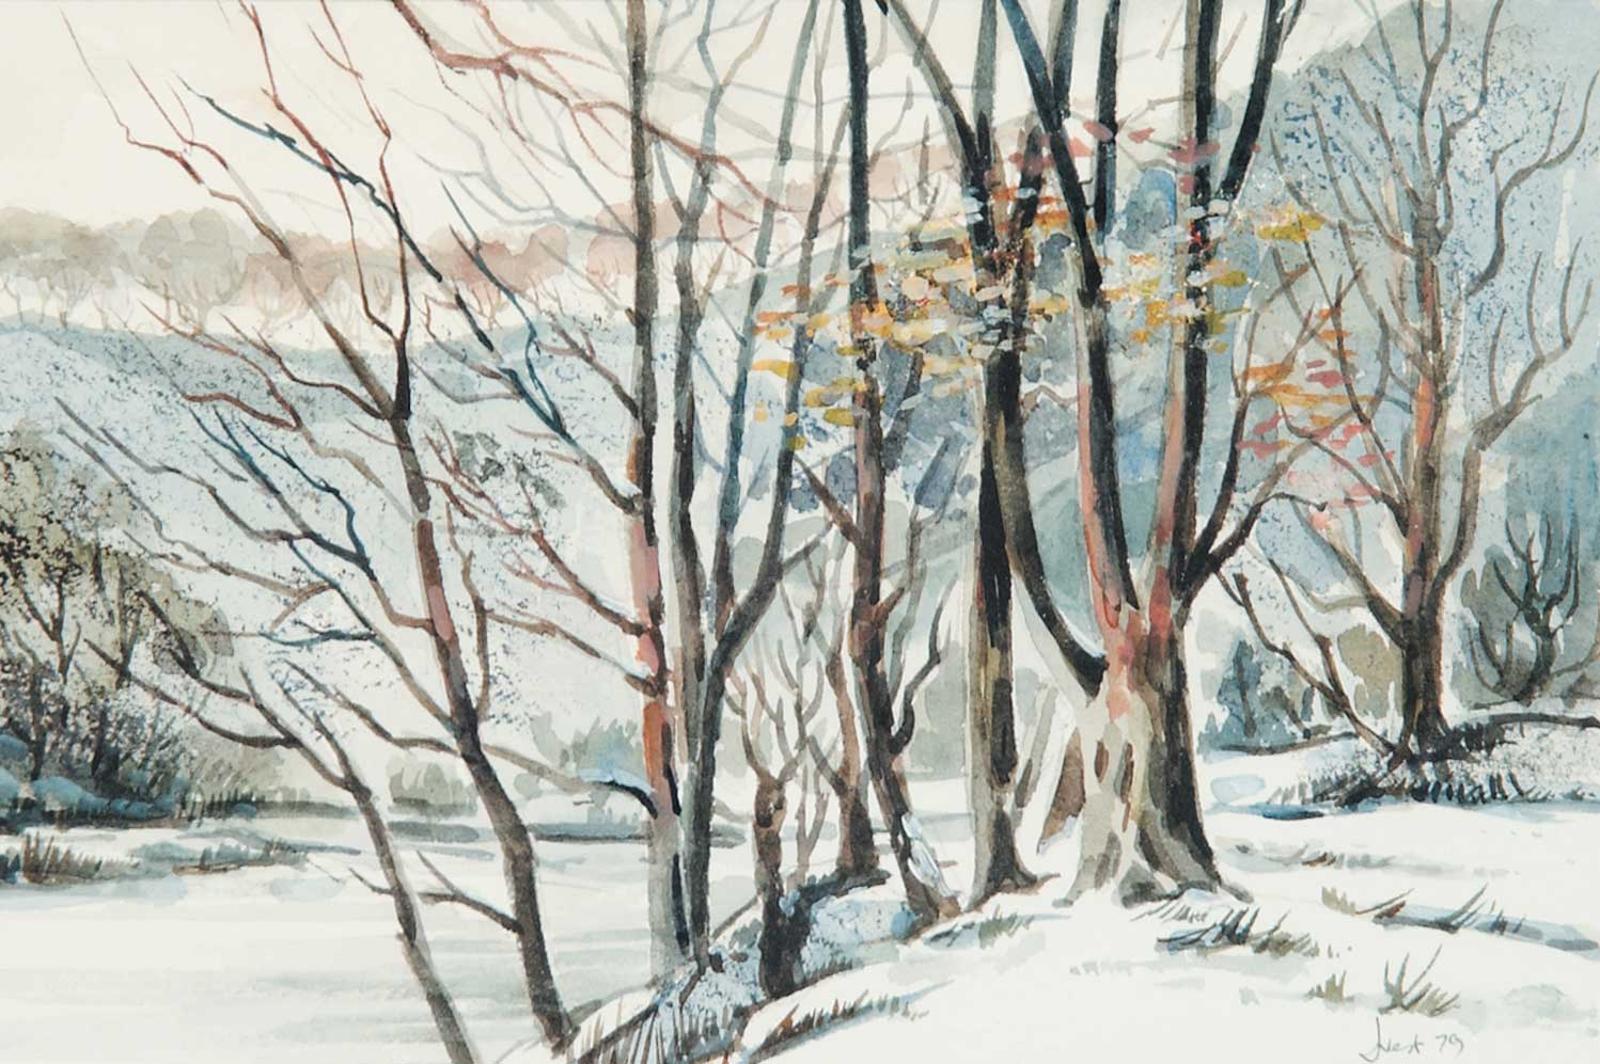 Jim Vest (1939) - Untitled - Winter Creek